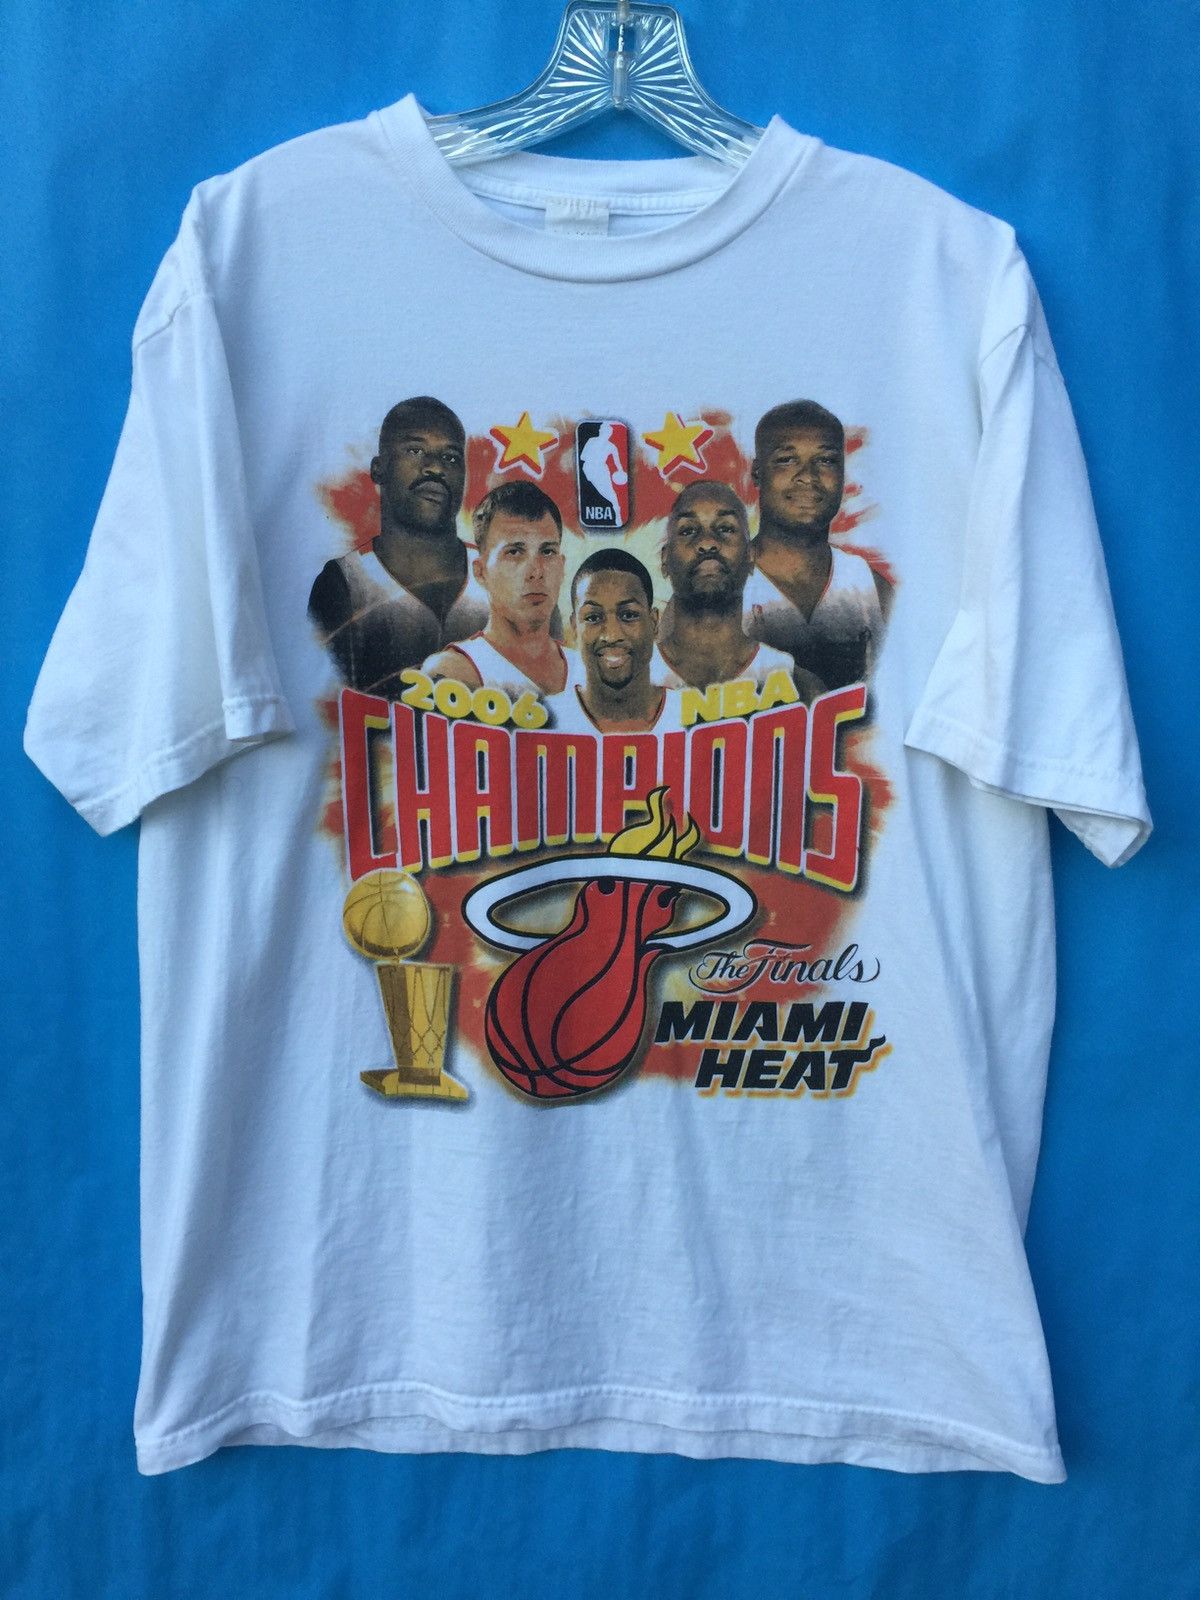 DEADSTOCK 2006 Miami Heat NBA T-shirt